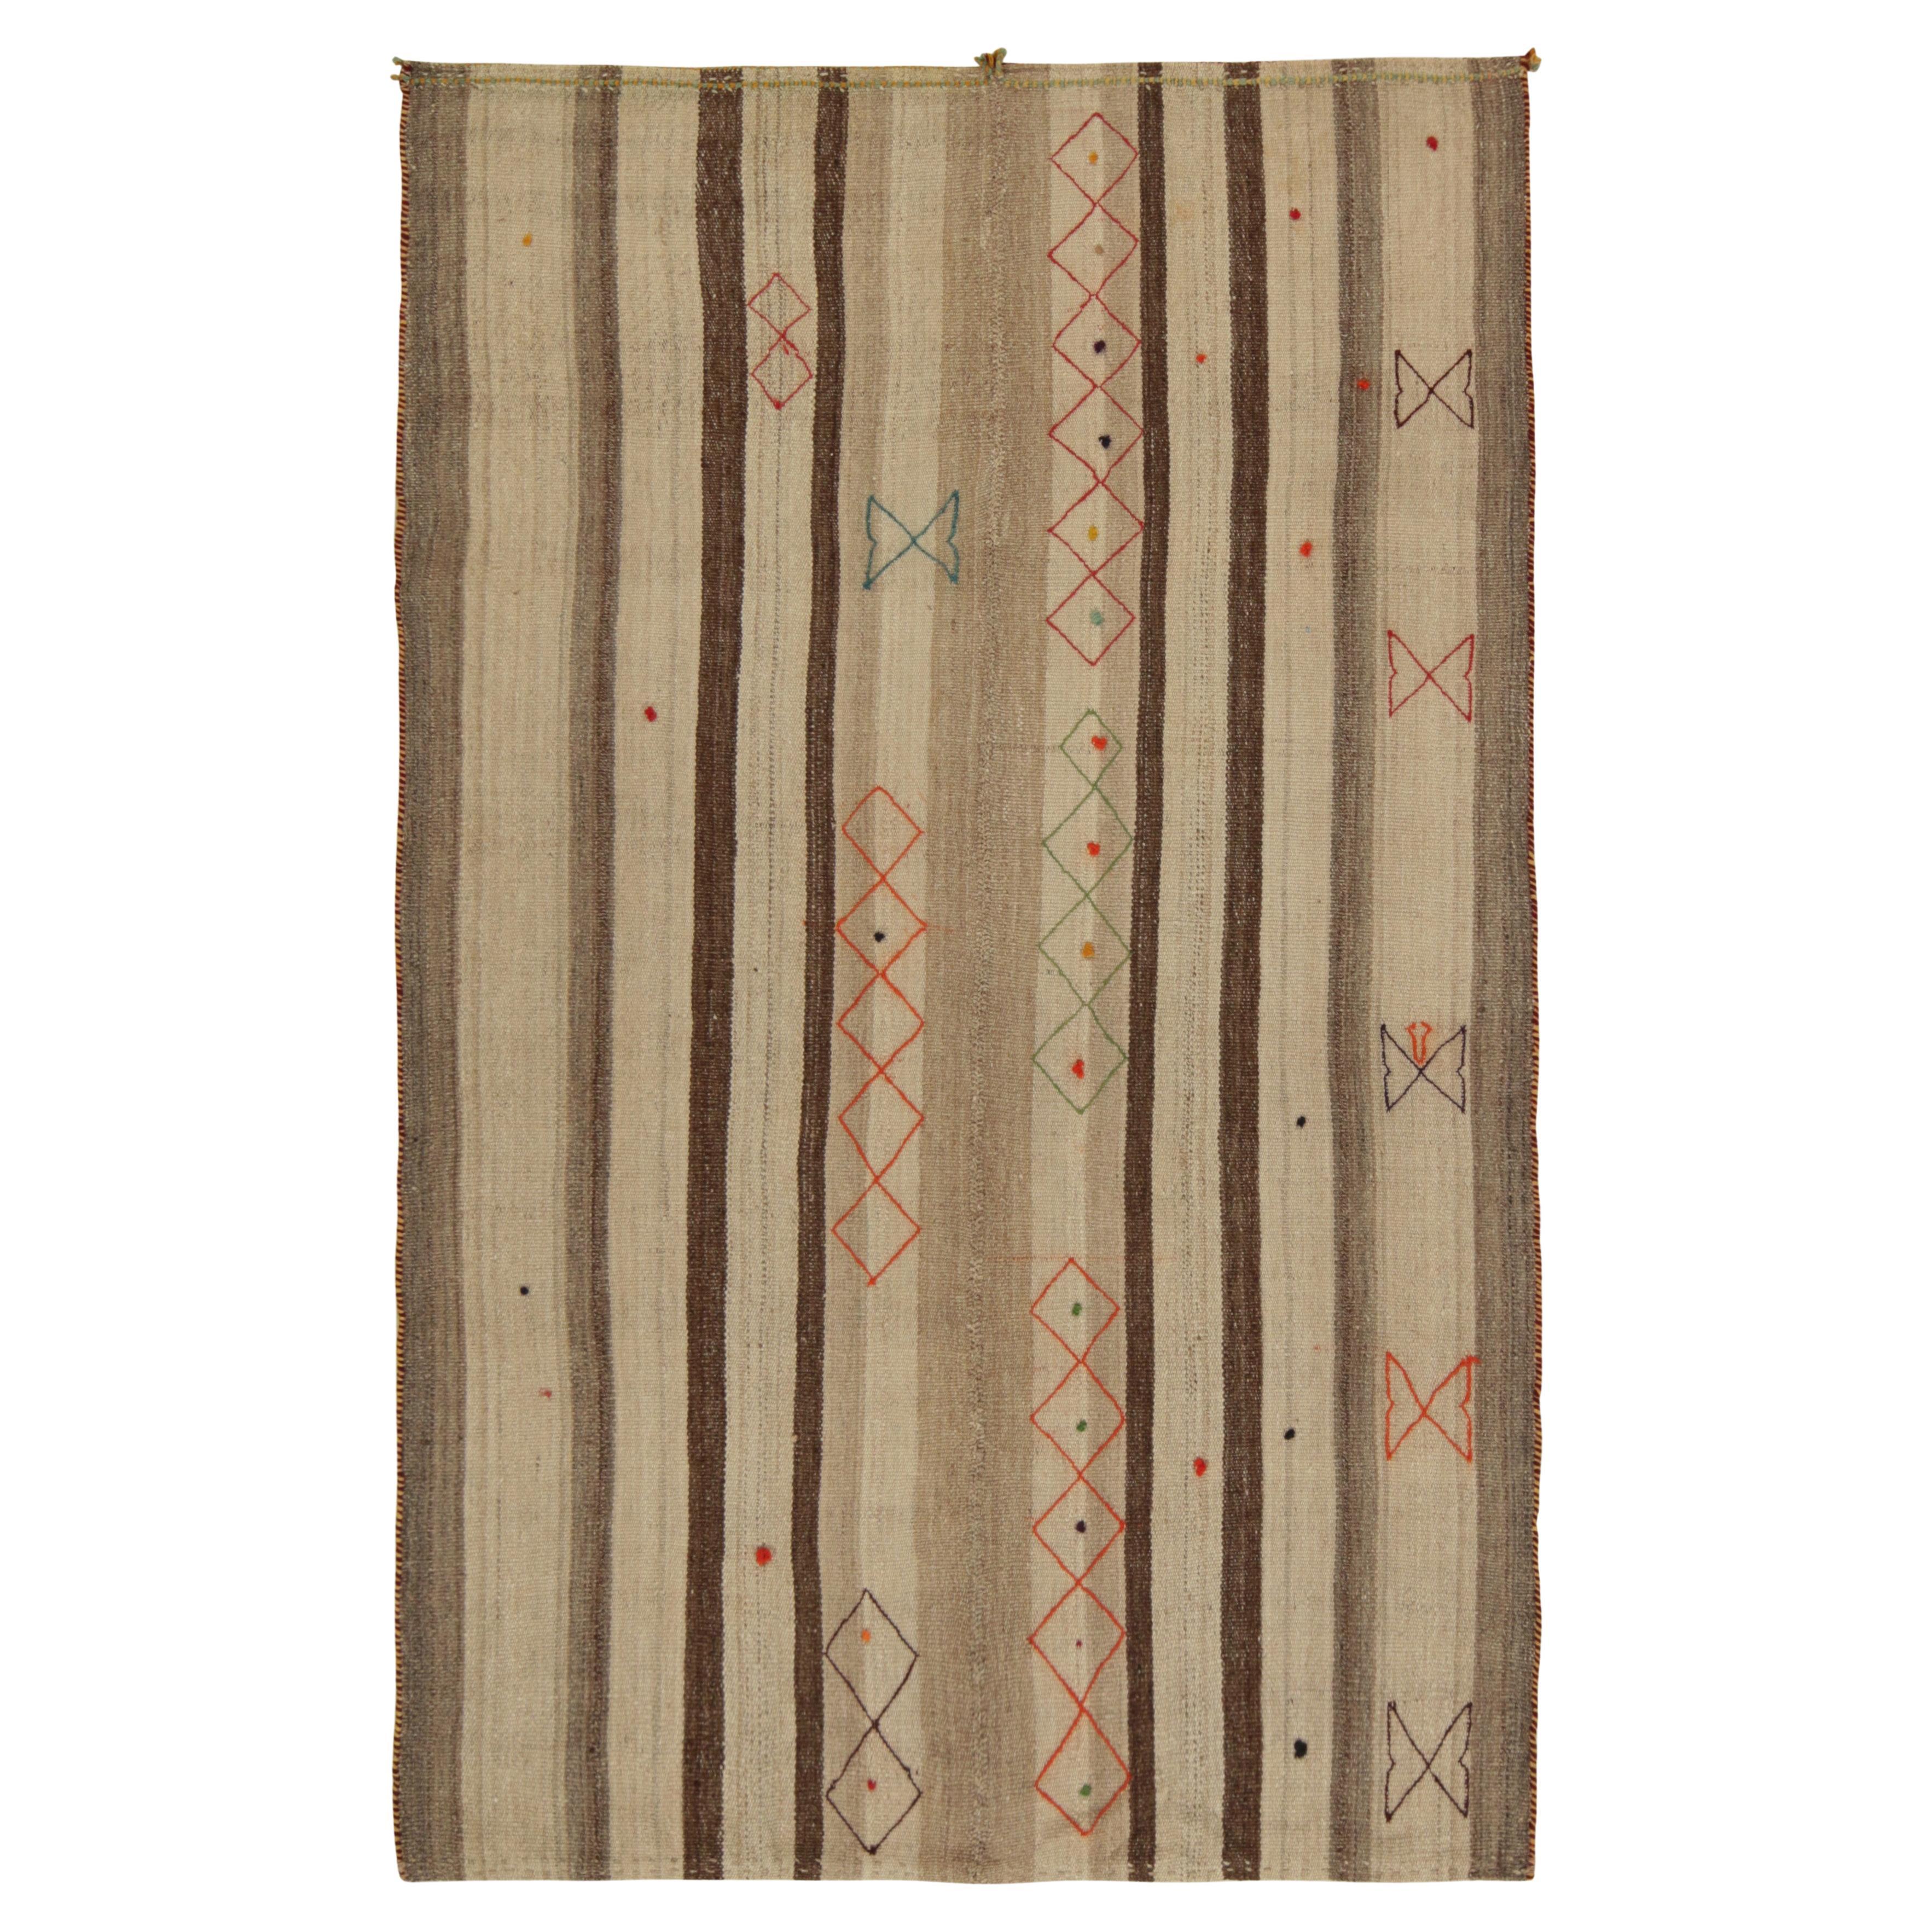 Vintage Persian Kilim Rug in Beige-Brown Stripes and Motifs by Rug & Kilim For Sale